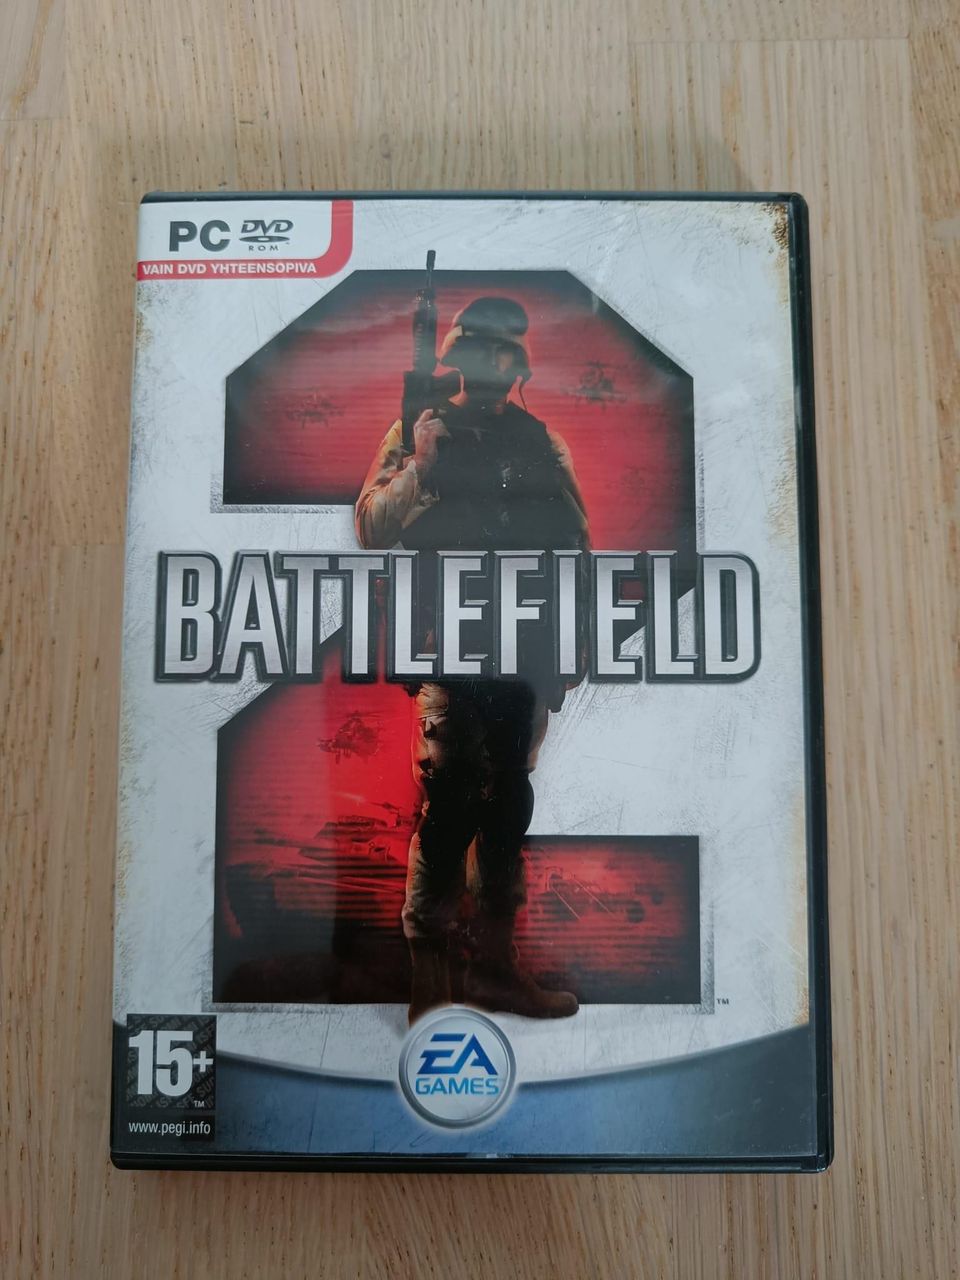 Battlefield 2 PC/DVD